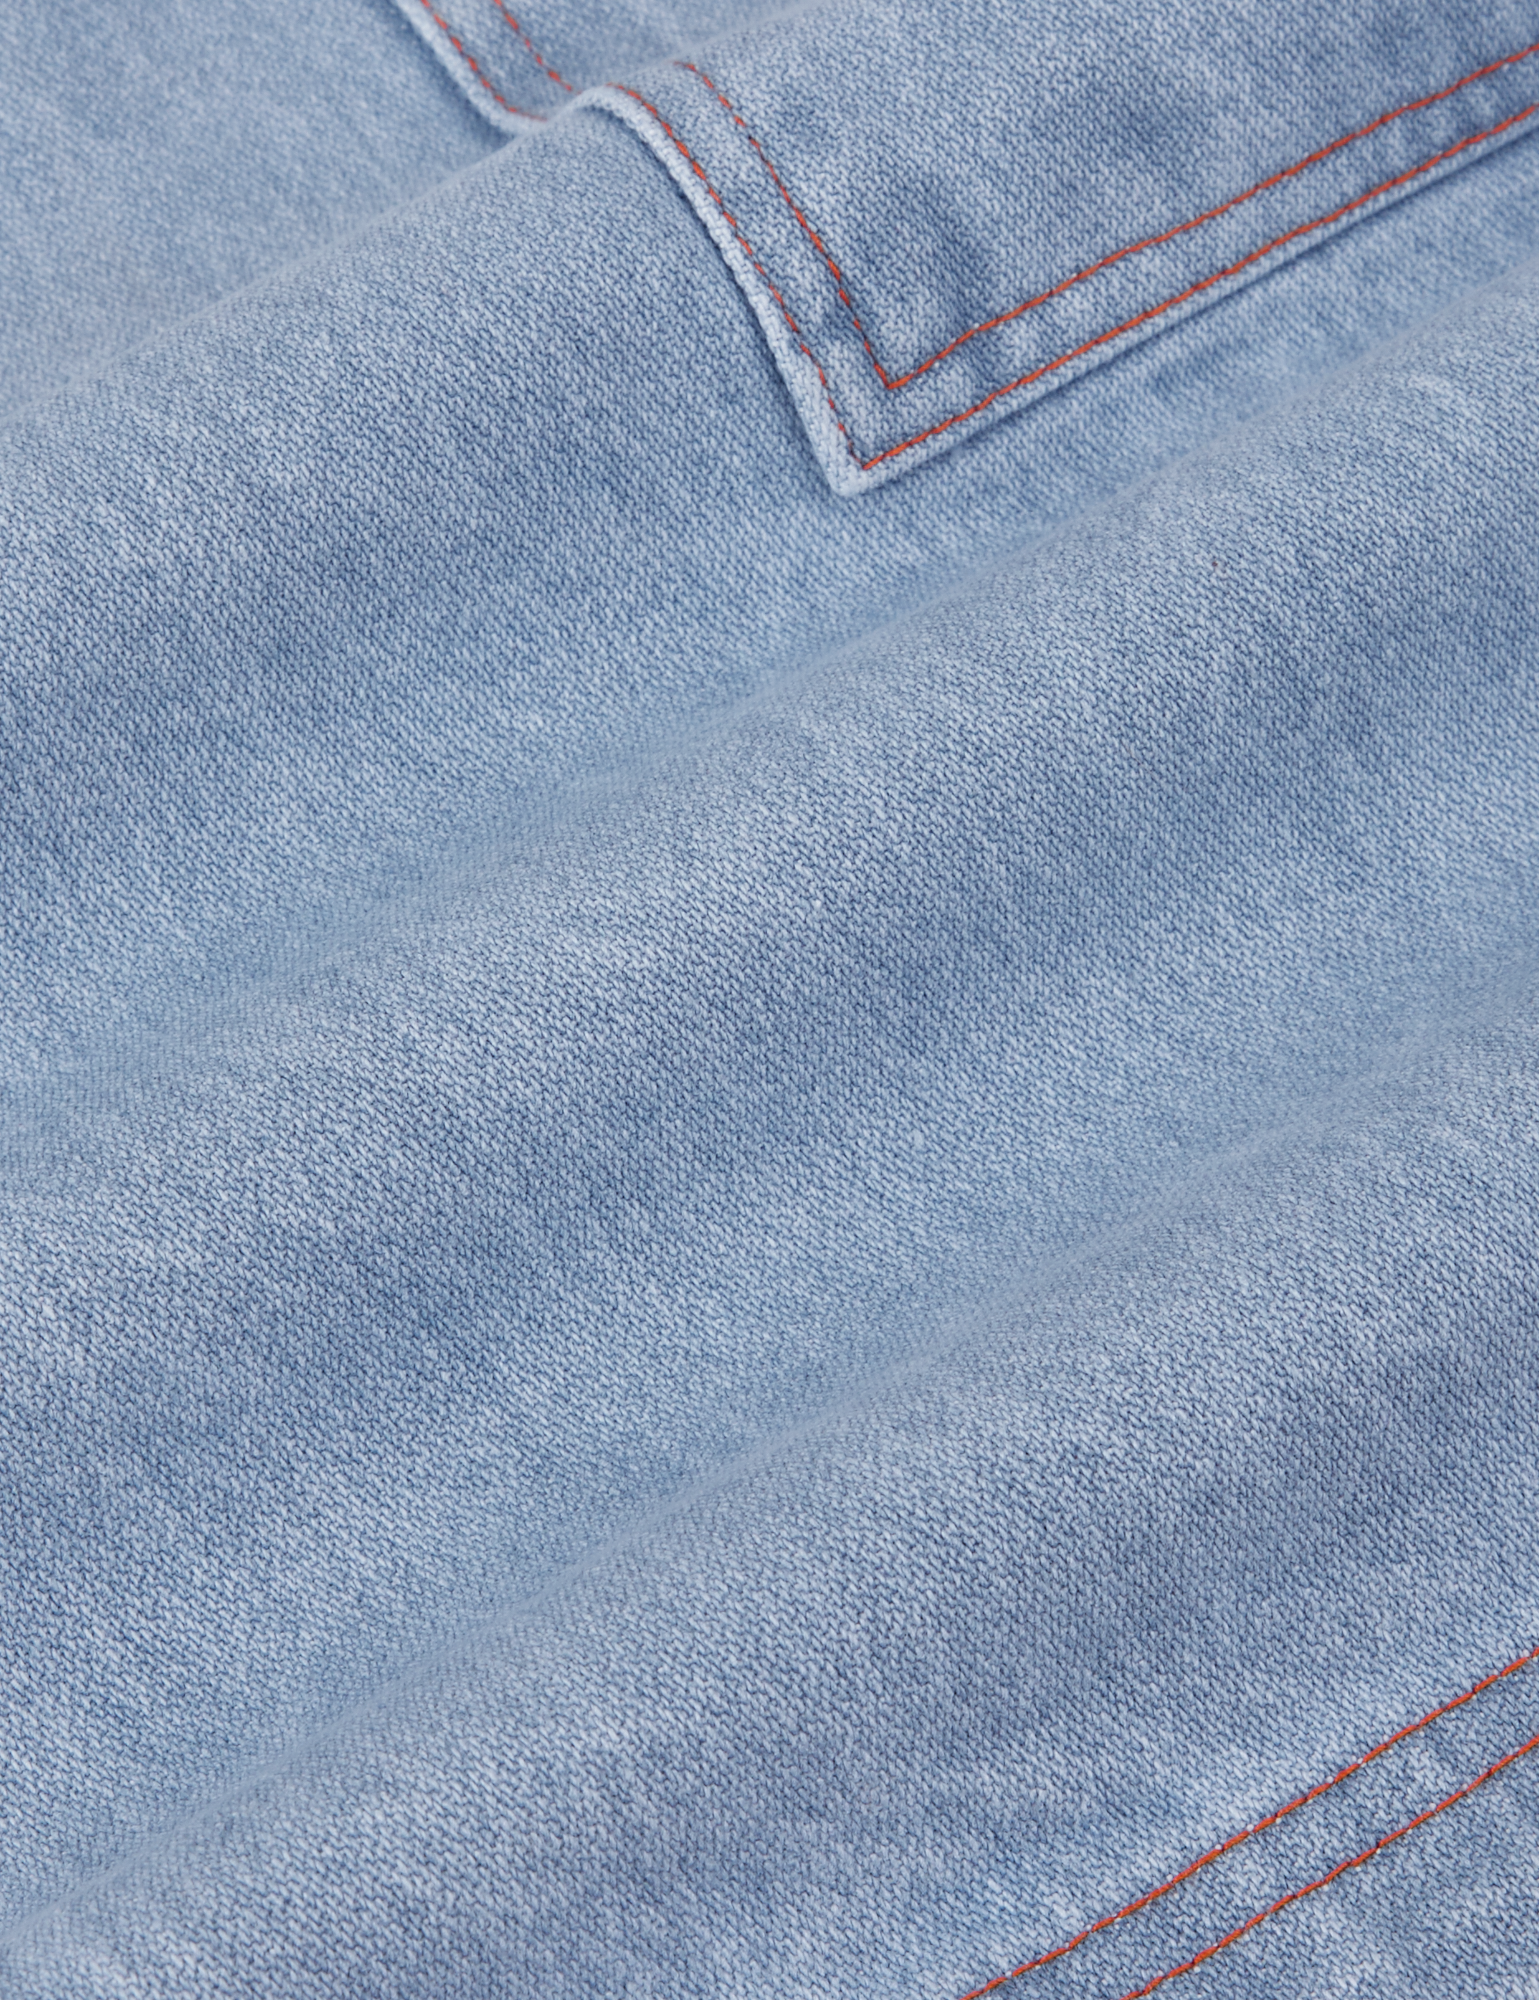 Carpenter Shorts in Light Wash fabric detail close up. Contrast orange stitching.